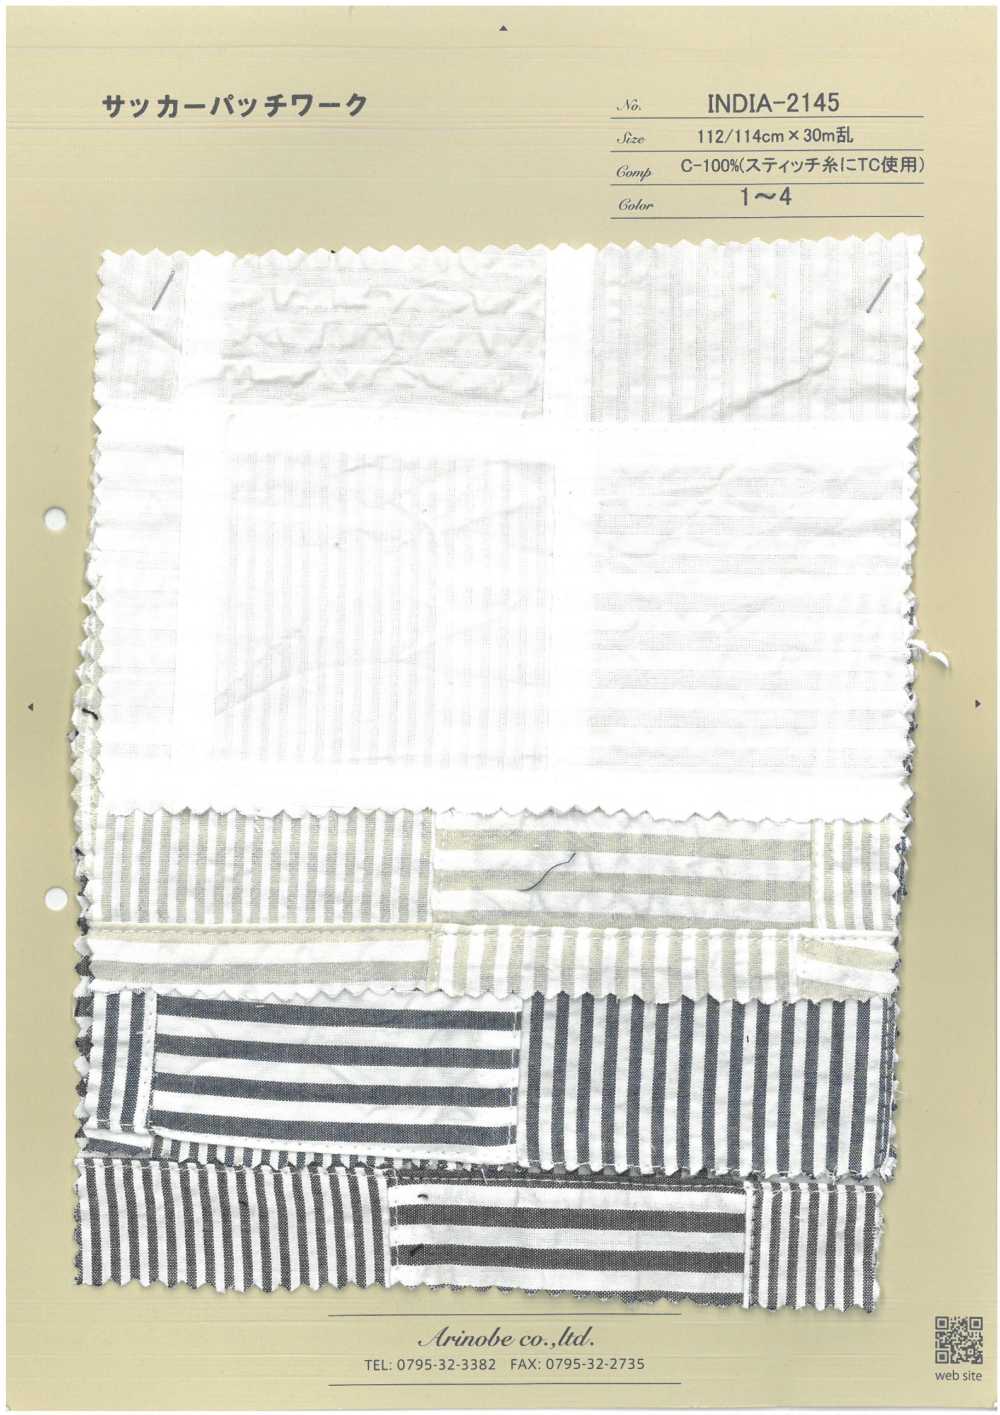 INDIA-2145 Patchwork De Seersucker[Fabrica Textil] ARINOBE CO., LTD.